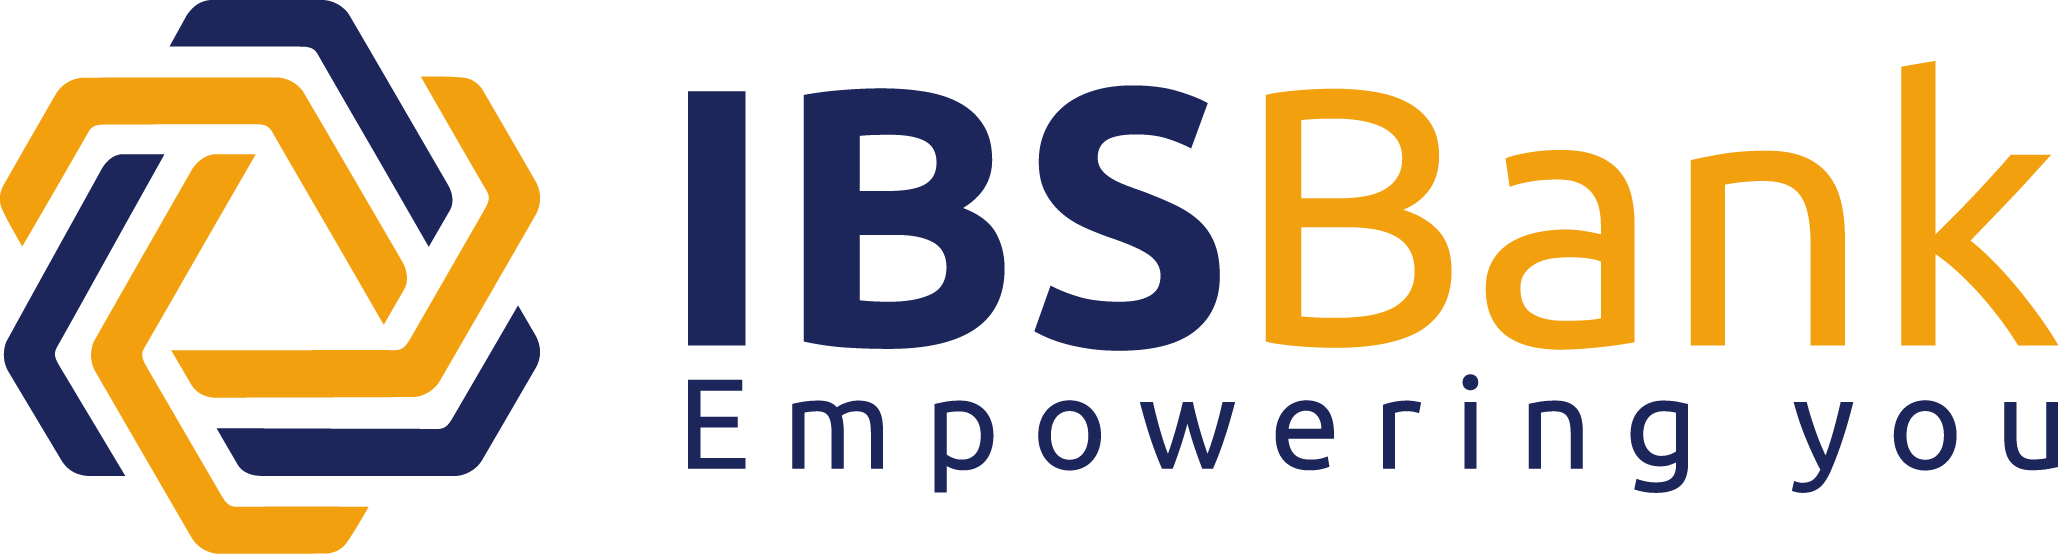 IBS_bank_logo_2019